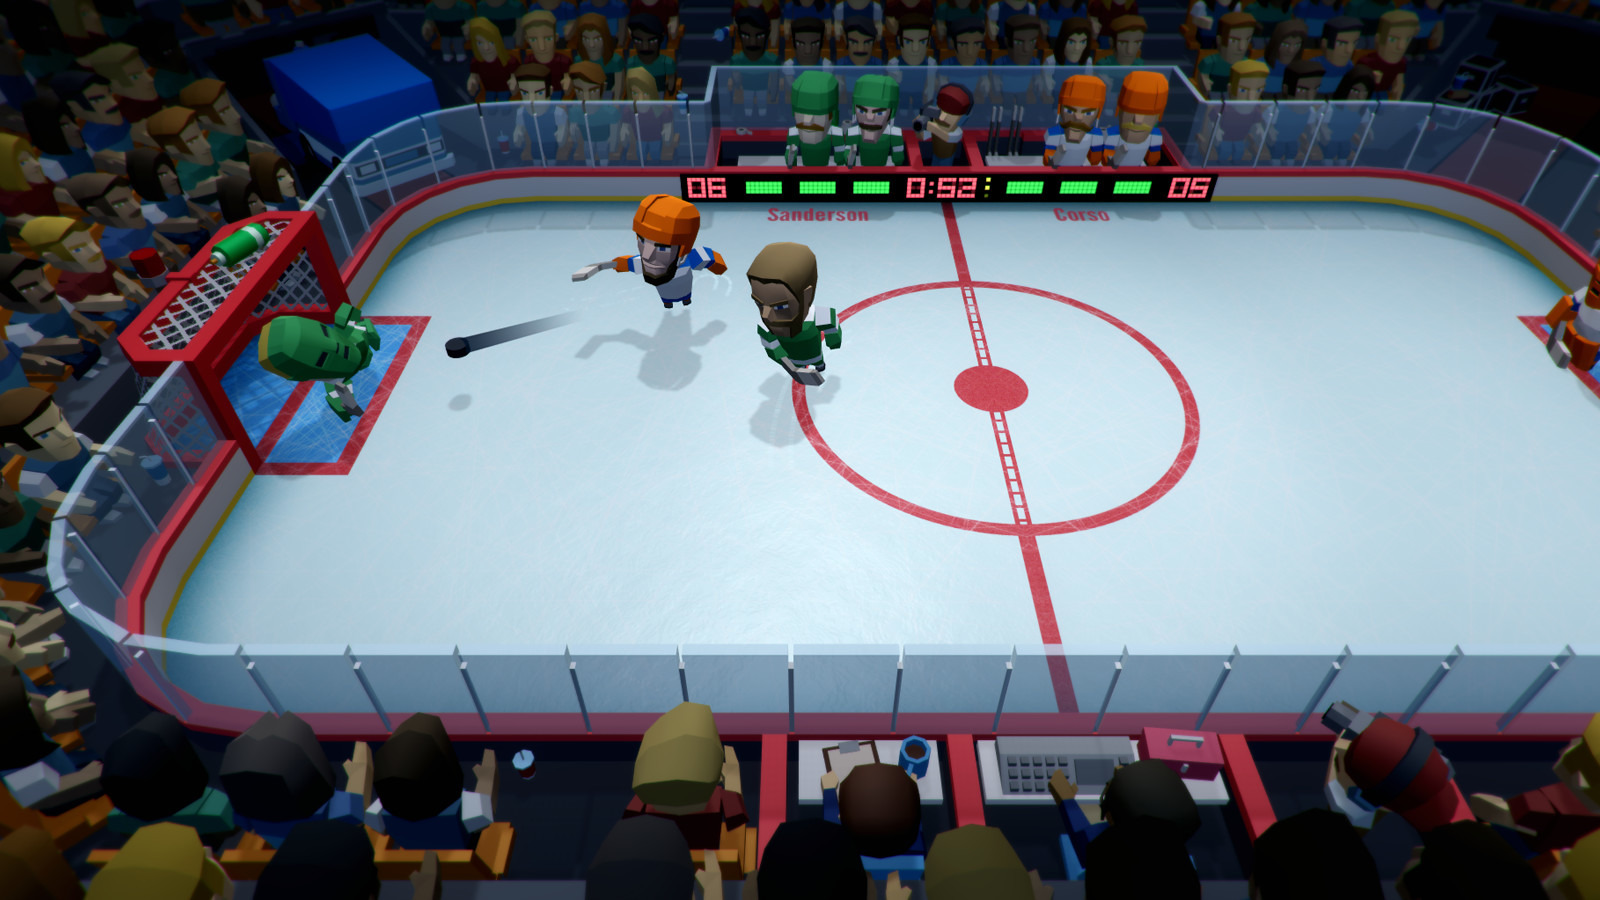 Mini Hockey Champ Hockey Games PC 